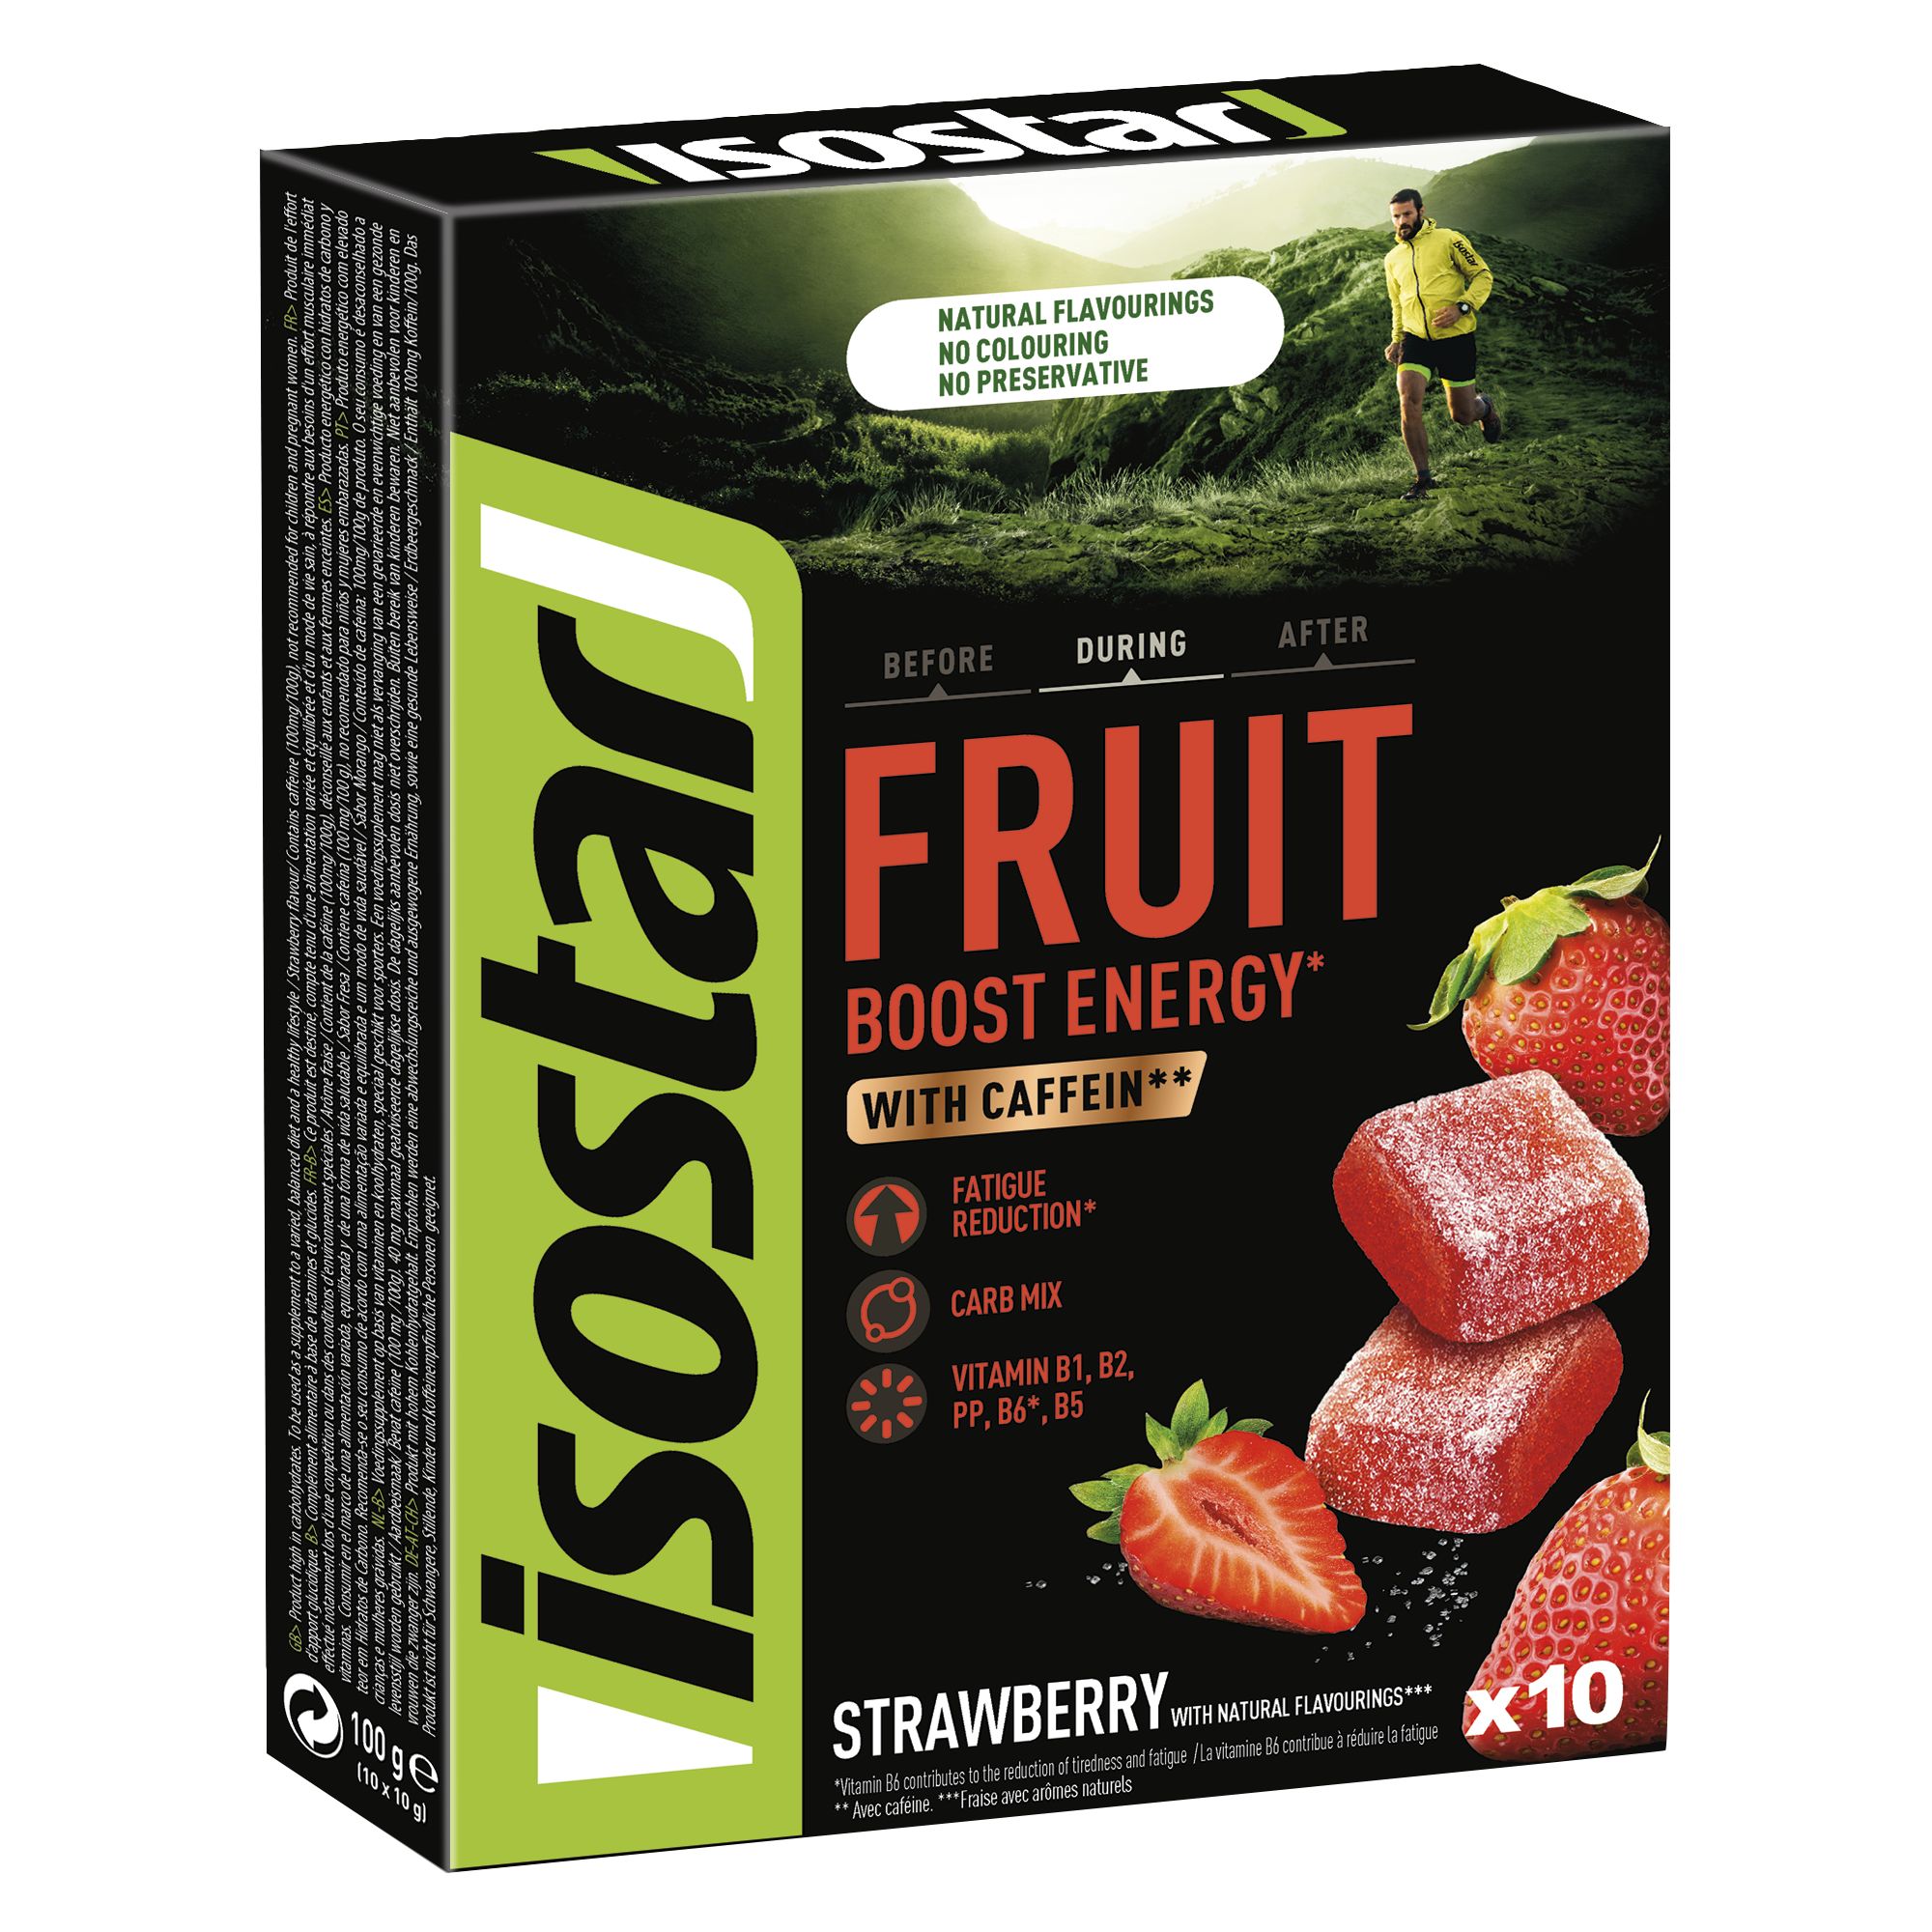 Bauturi & Energizante Fruit Boost Isostar La reduceri Bauturi